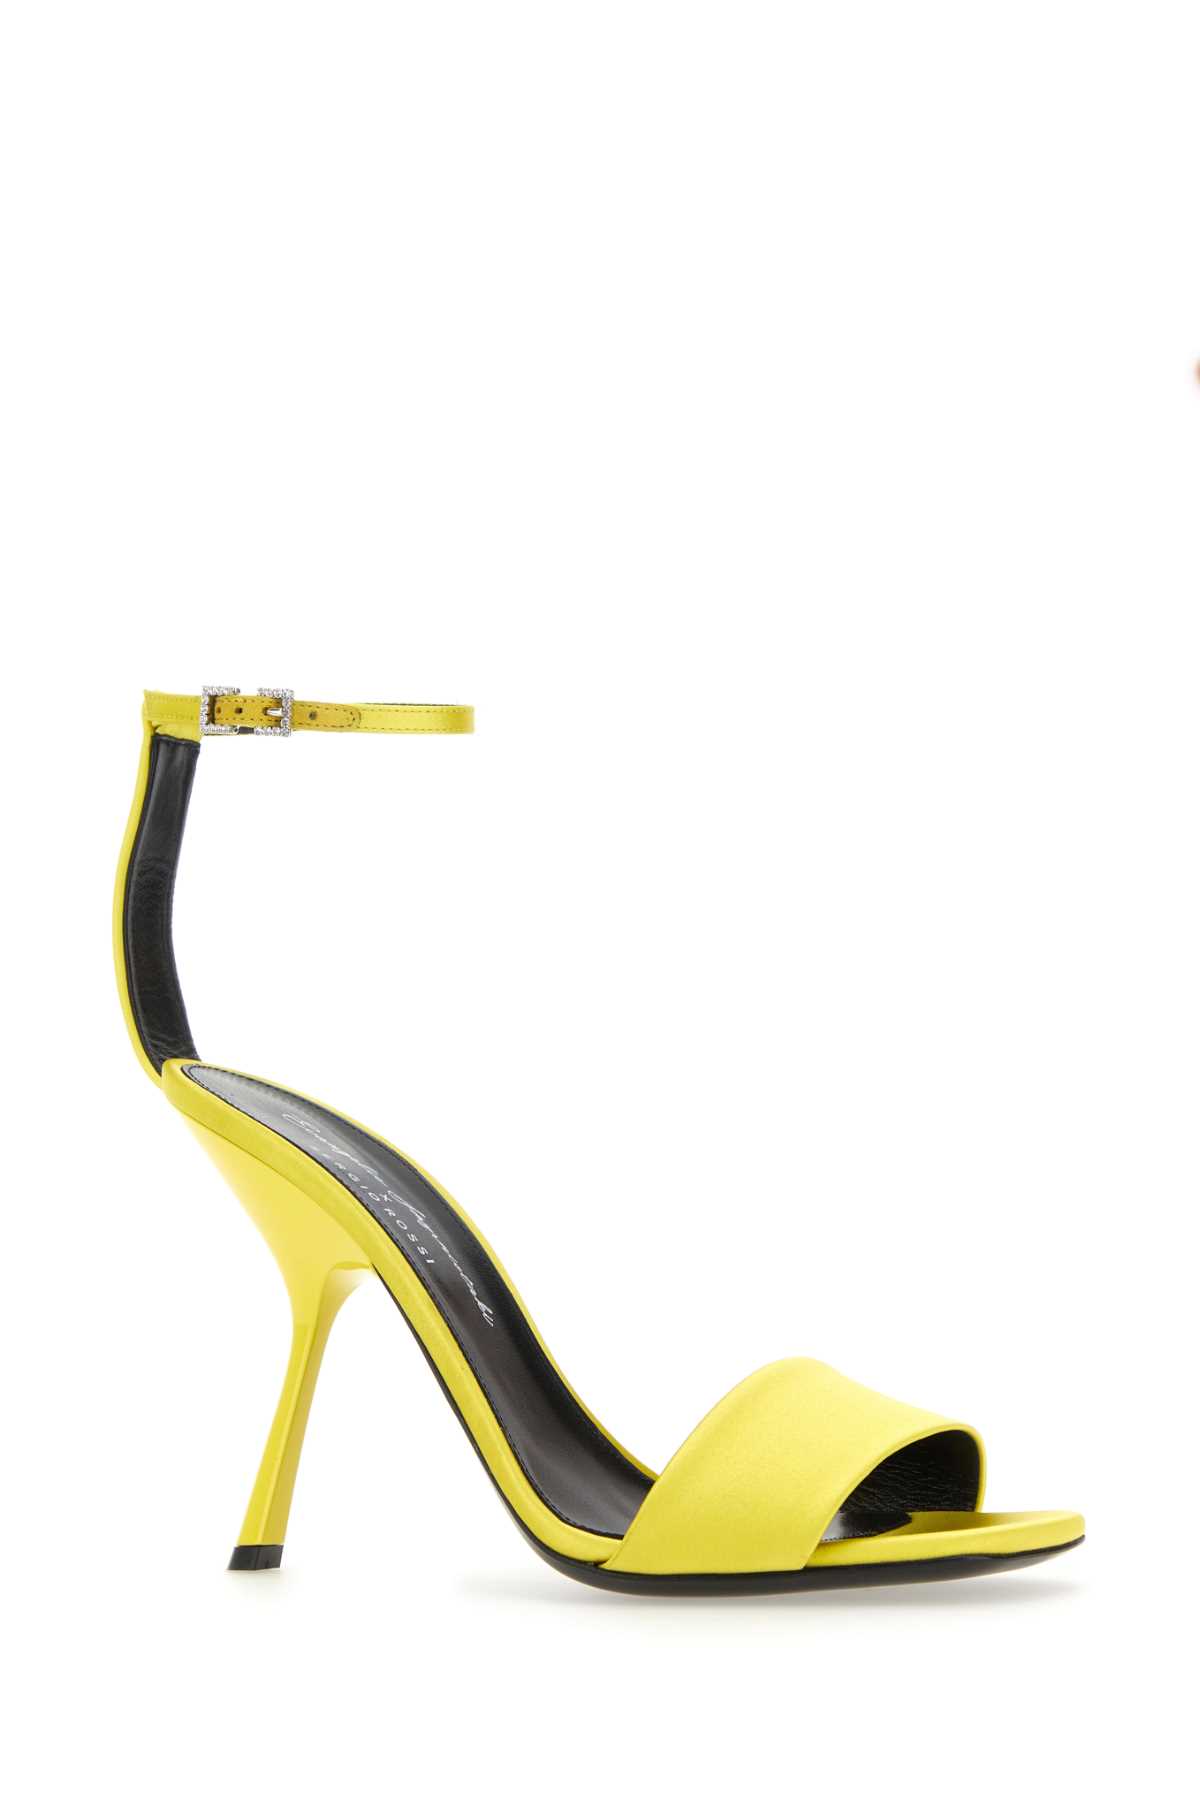 Shop Sergio Rossi Yellow Satin Sandals